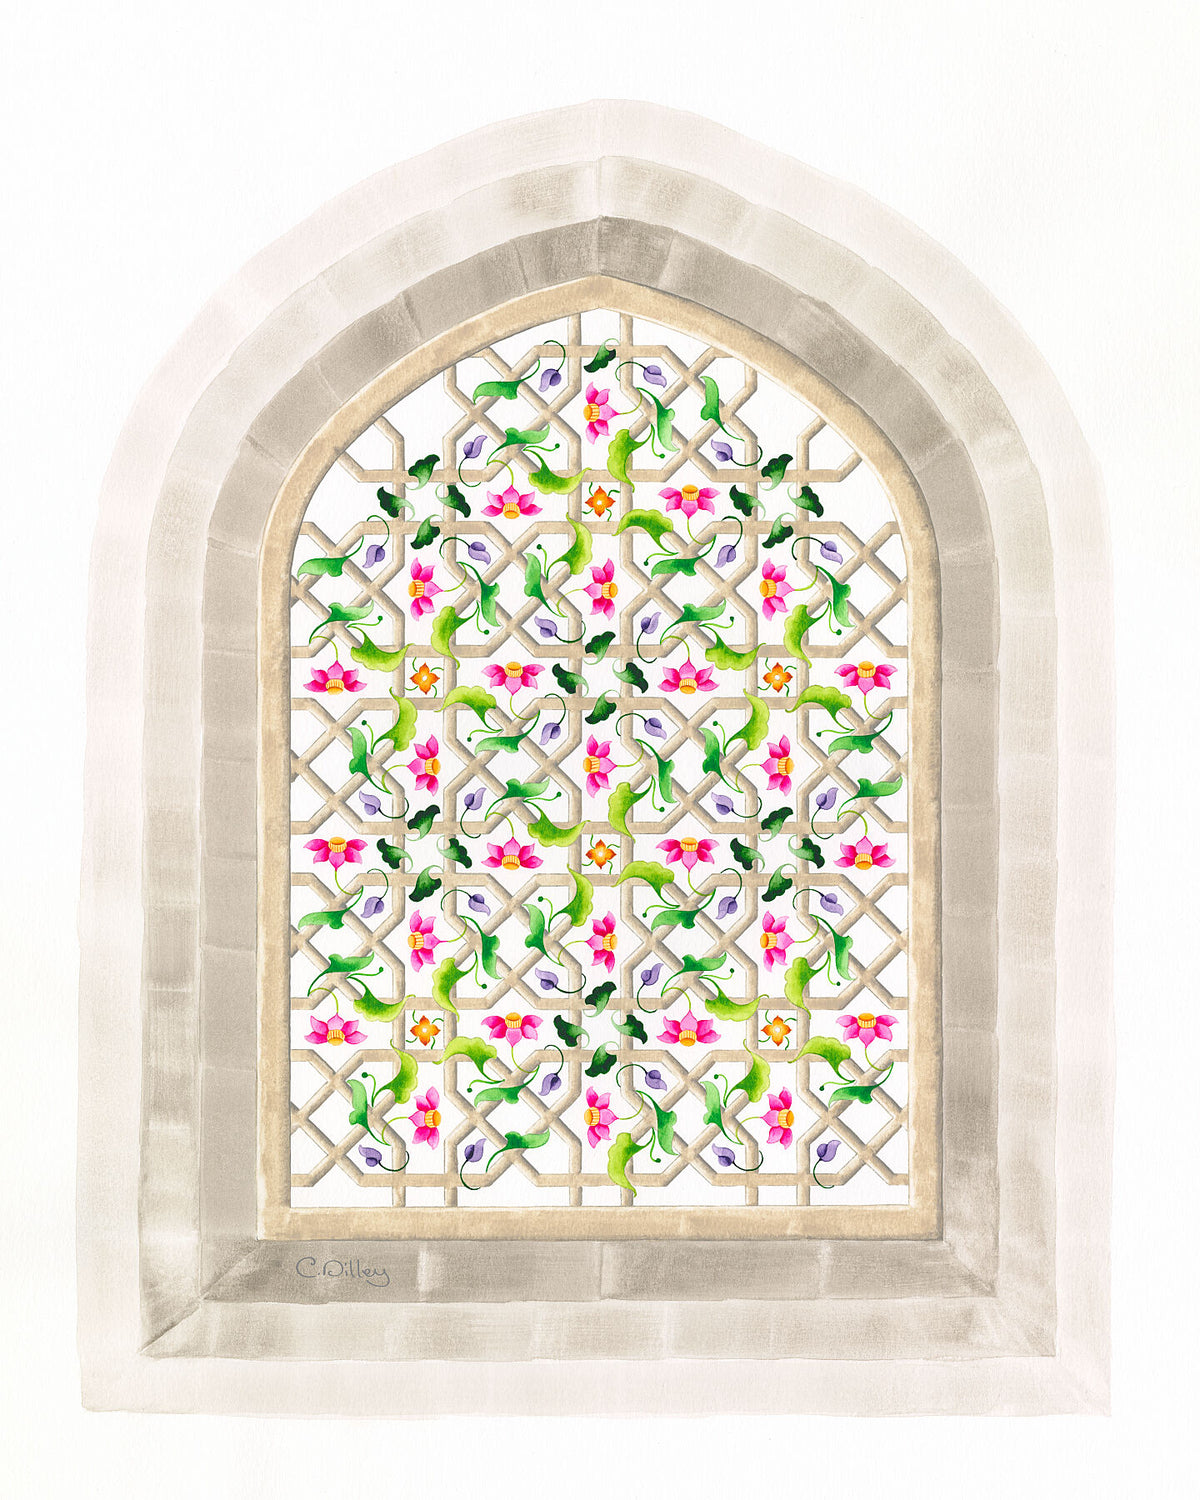 Elegant art print of watercolour geometric lattice window arch with intertwining vibrant pink and green foliage